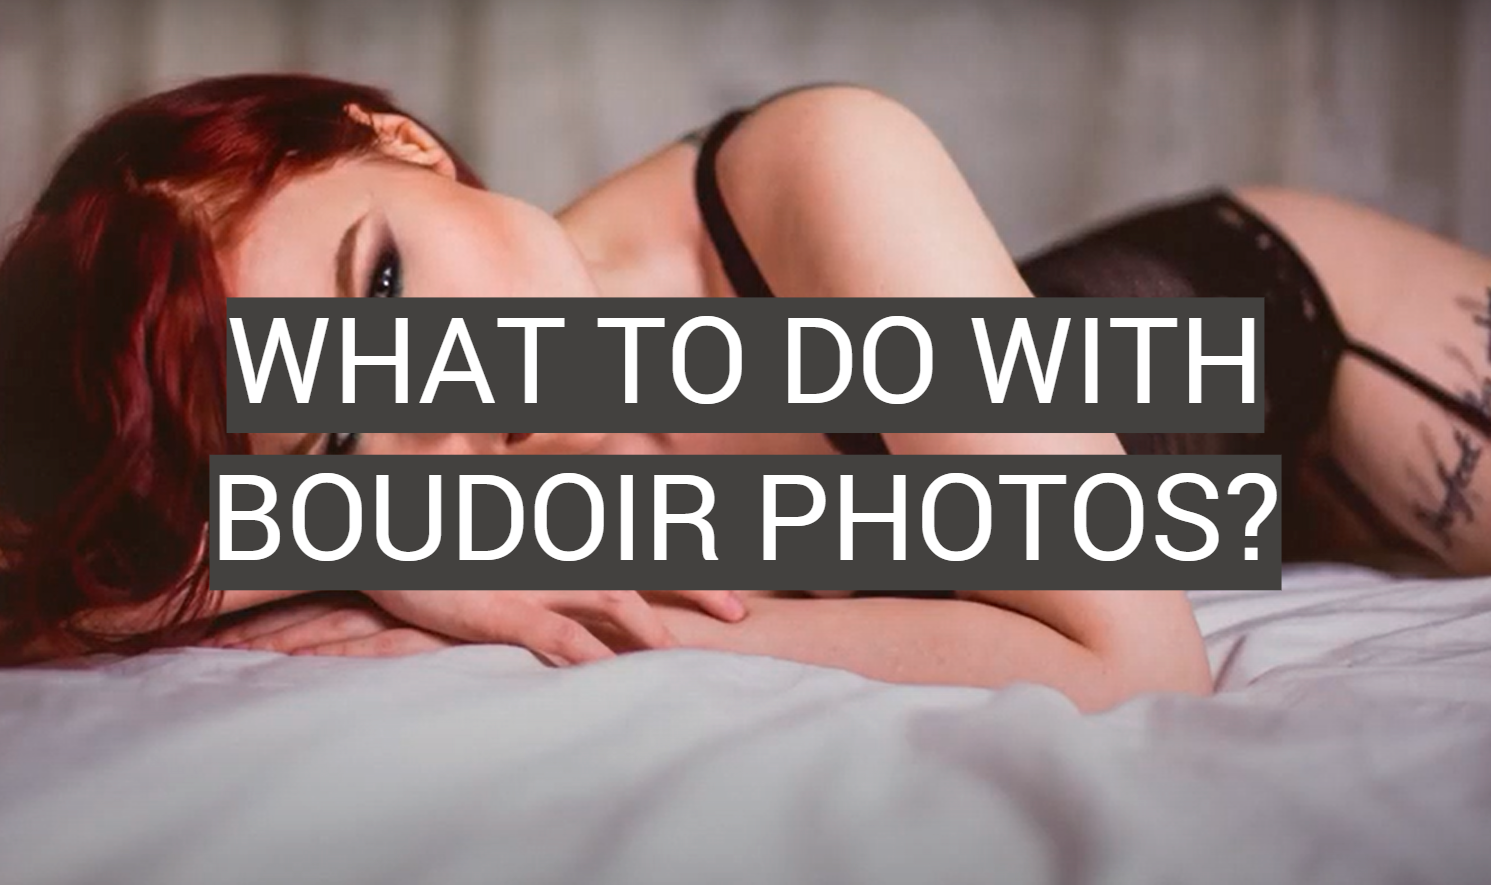 What to Do With Boudoir Photos?